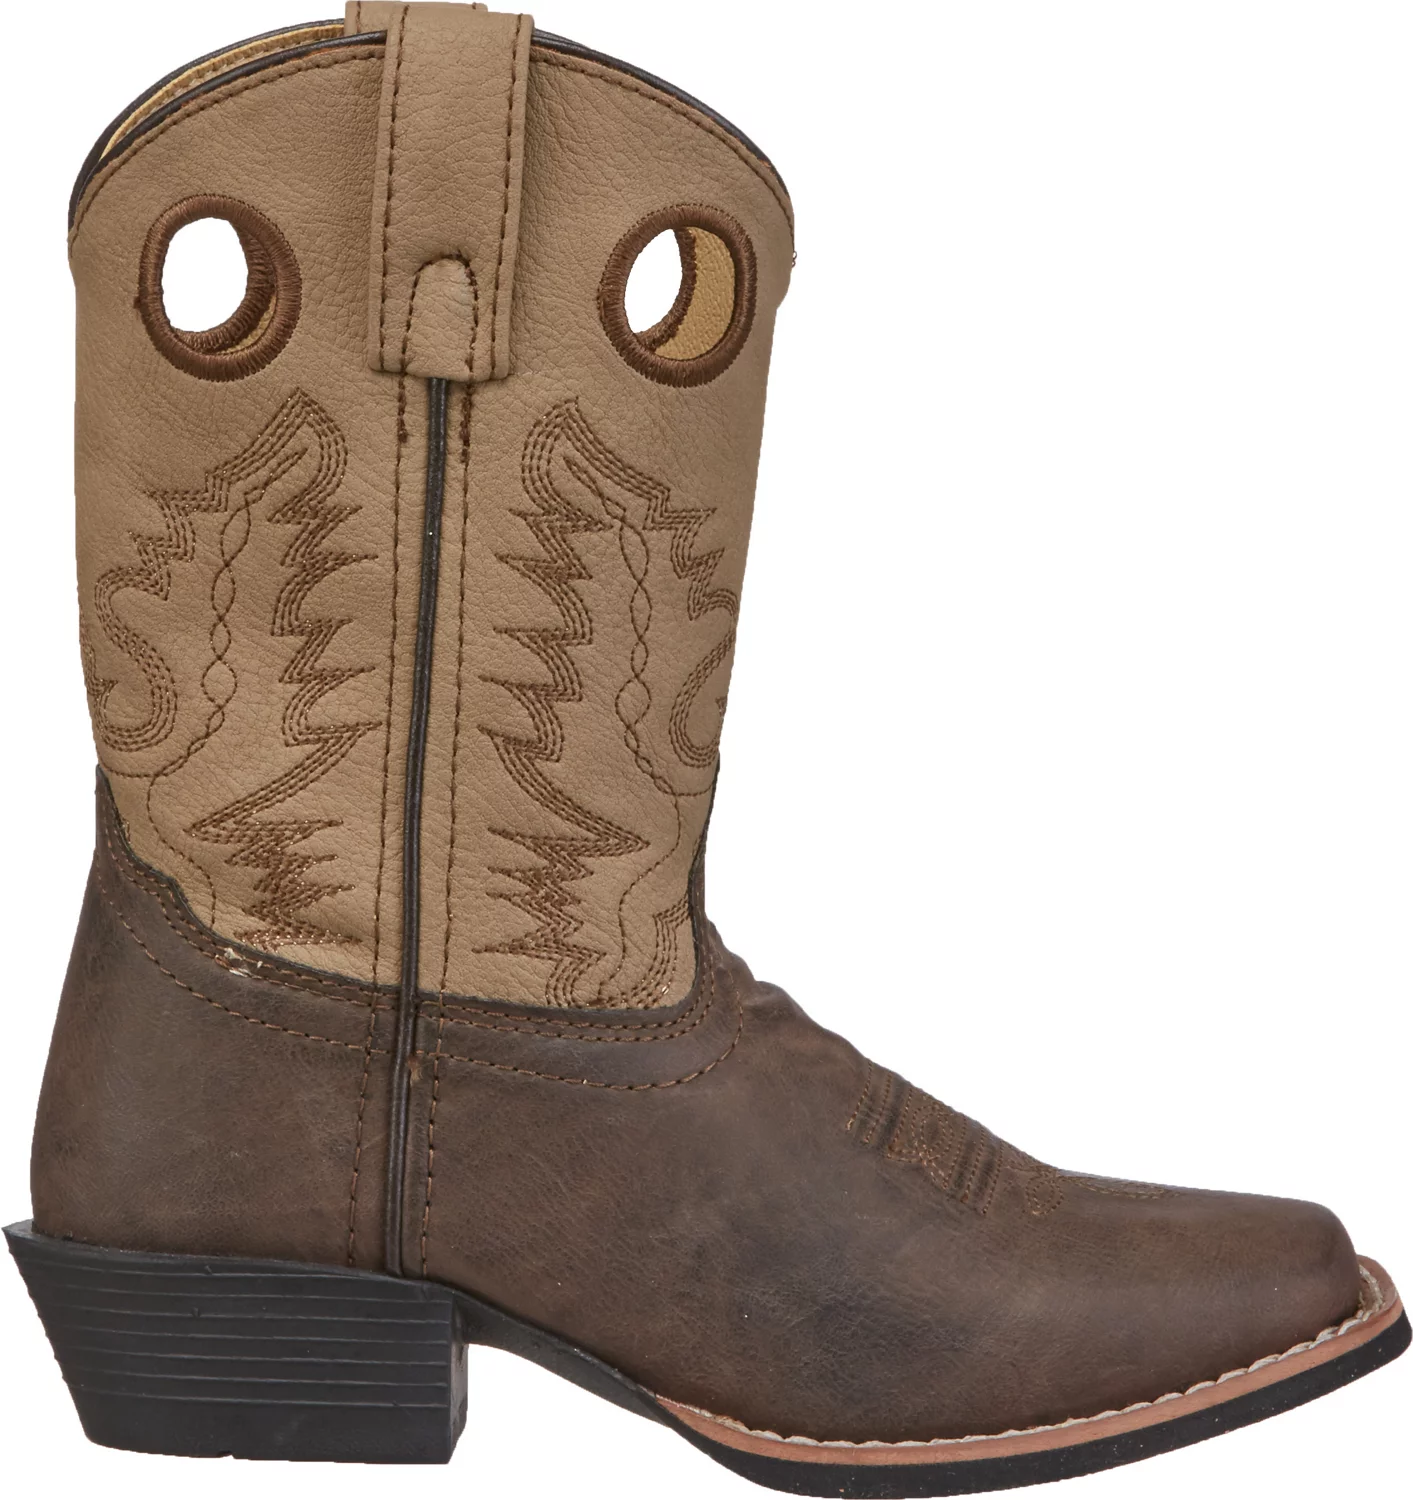 Girls' Western Boots | Girls' Cowboy Boots, Cowboy Boots For Girls ...